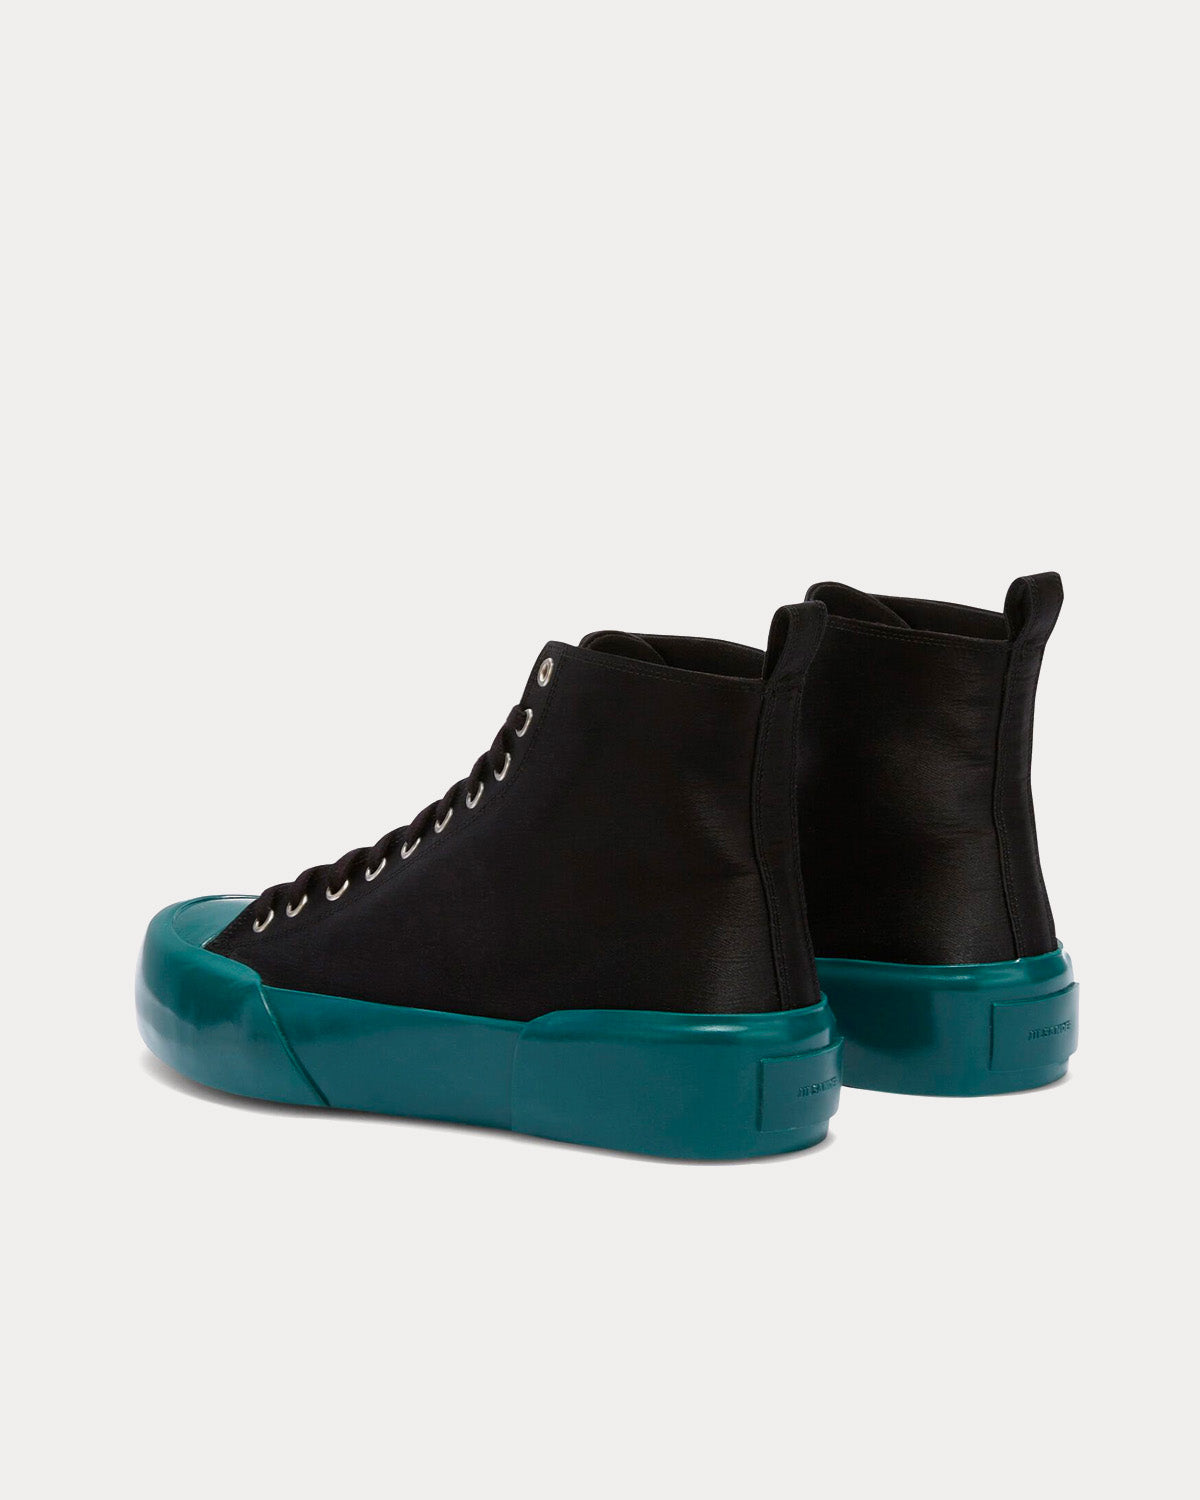 Jil Sander - Vulcanised Rubber & Canvas Black / Turquoise High Top Sneakers